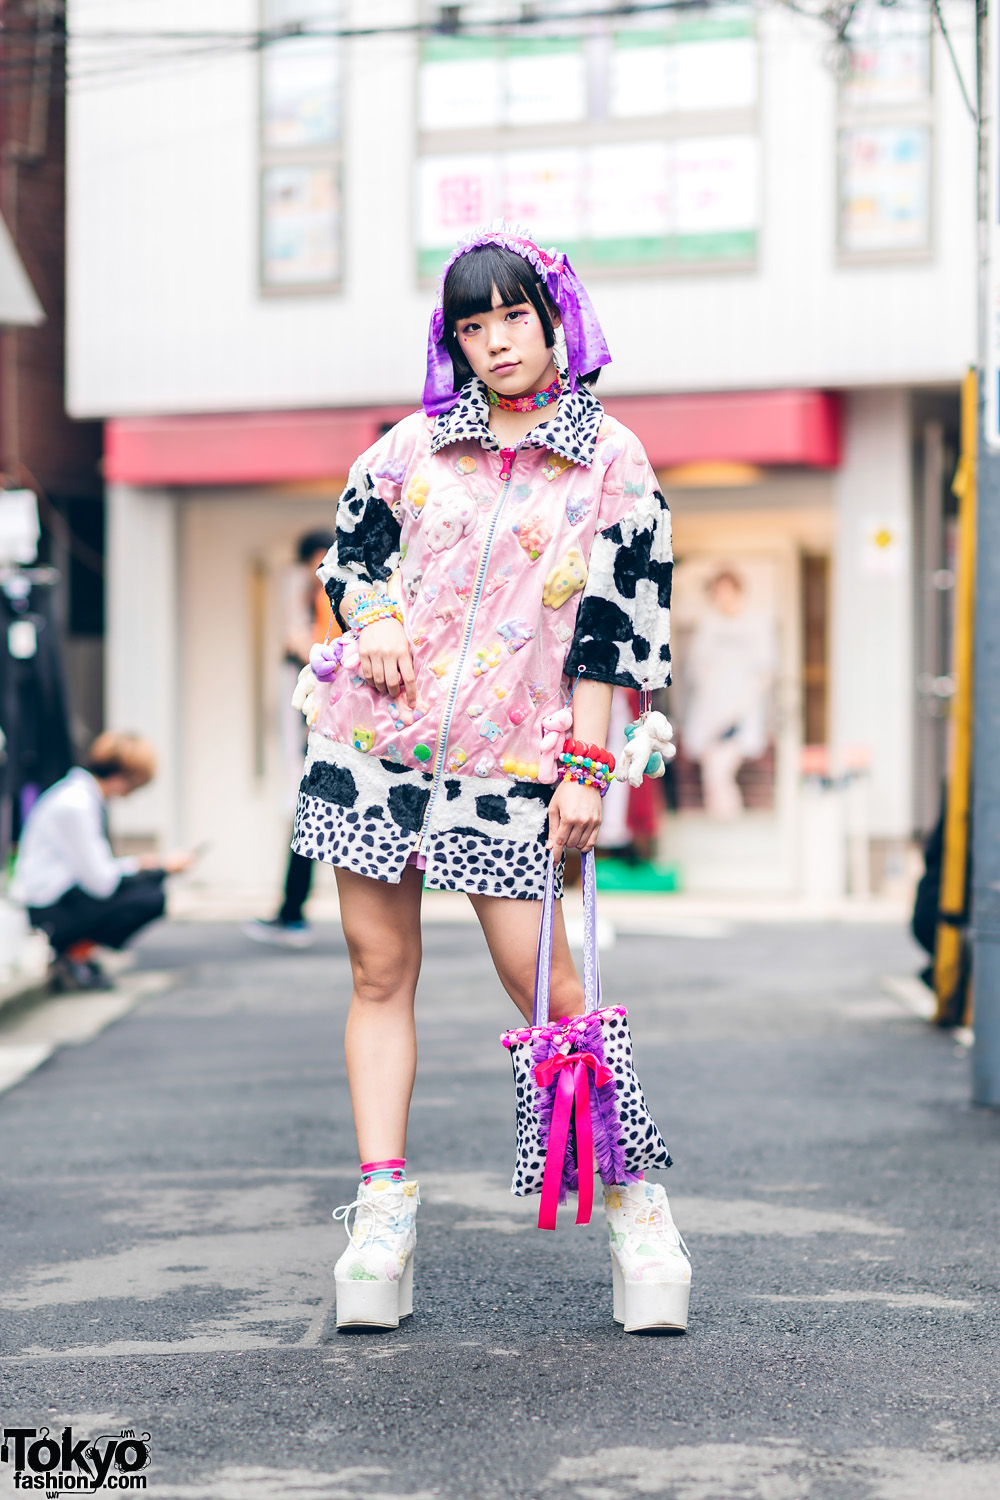 Handmade Kawaii Street Style in Harajuku w/ Floral Choker, Fuzzy Toys Dress, Candy Bracelets, Dalmatian Print Tote & Platform Boots